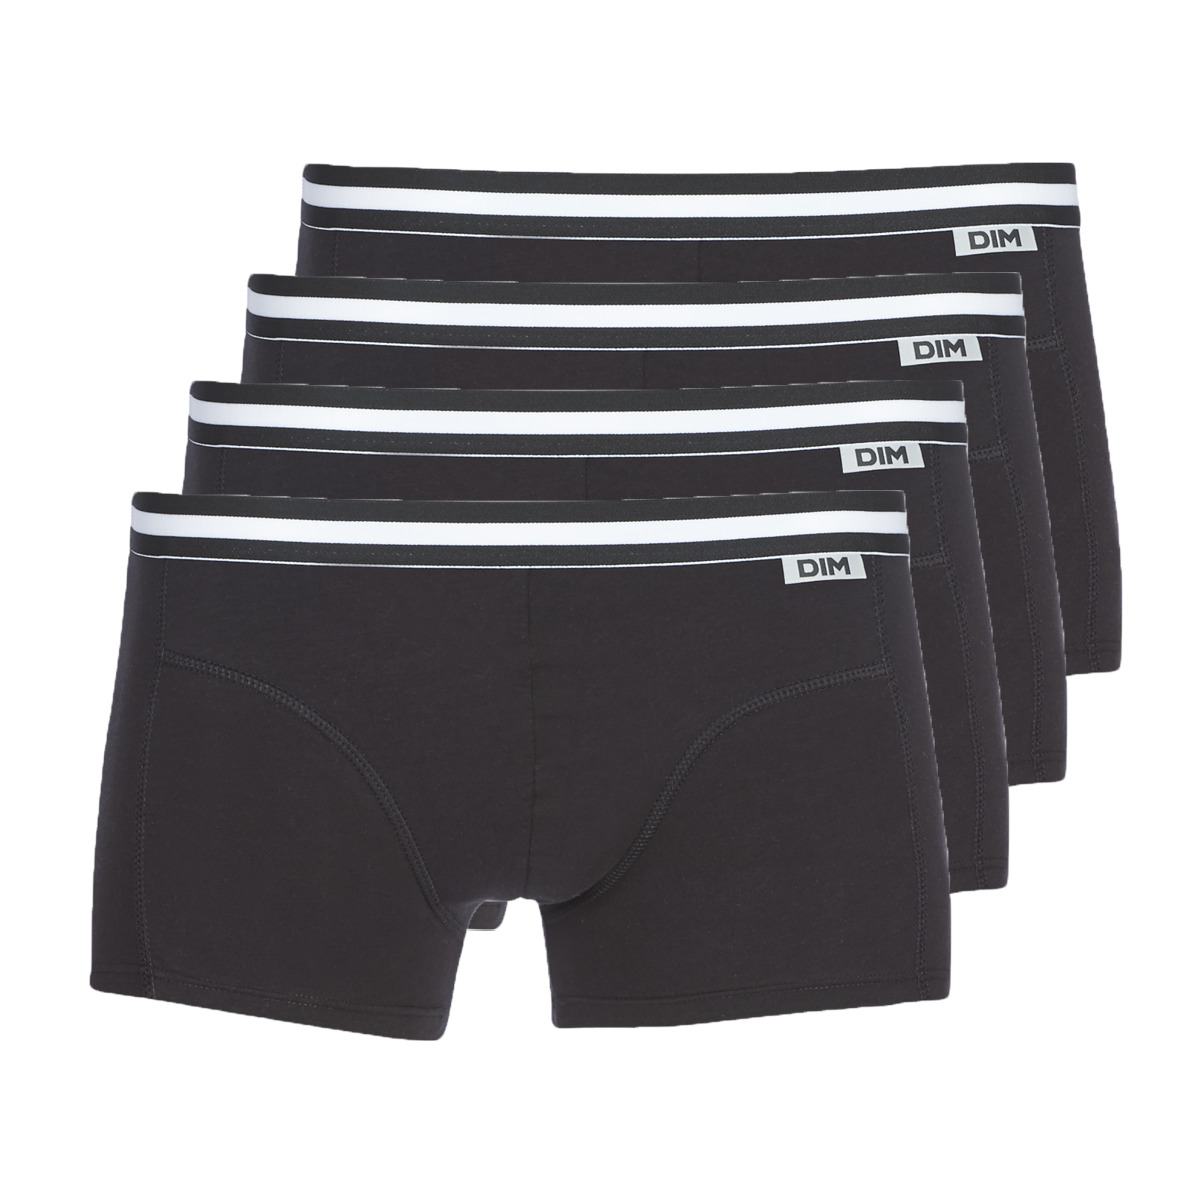 DIM ECODIM COTON X 4 Black - Fast delivery  Spartoo Europe ! - Underwear  Boxer shorts Men 34,00 €